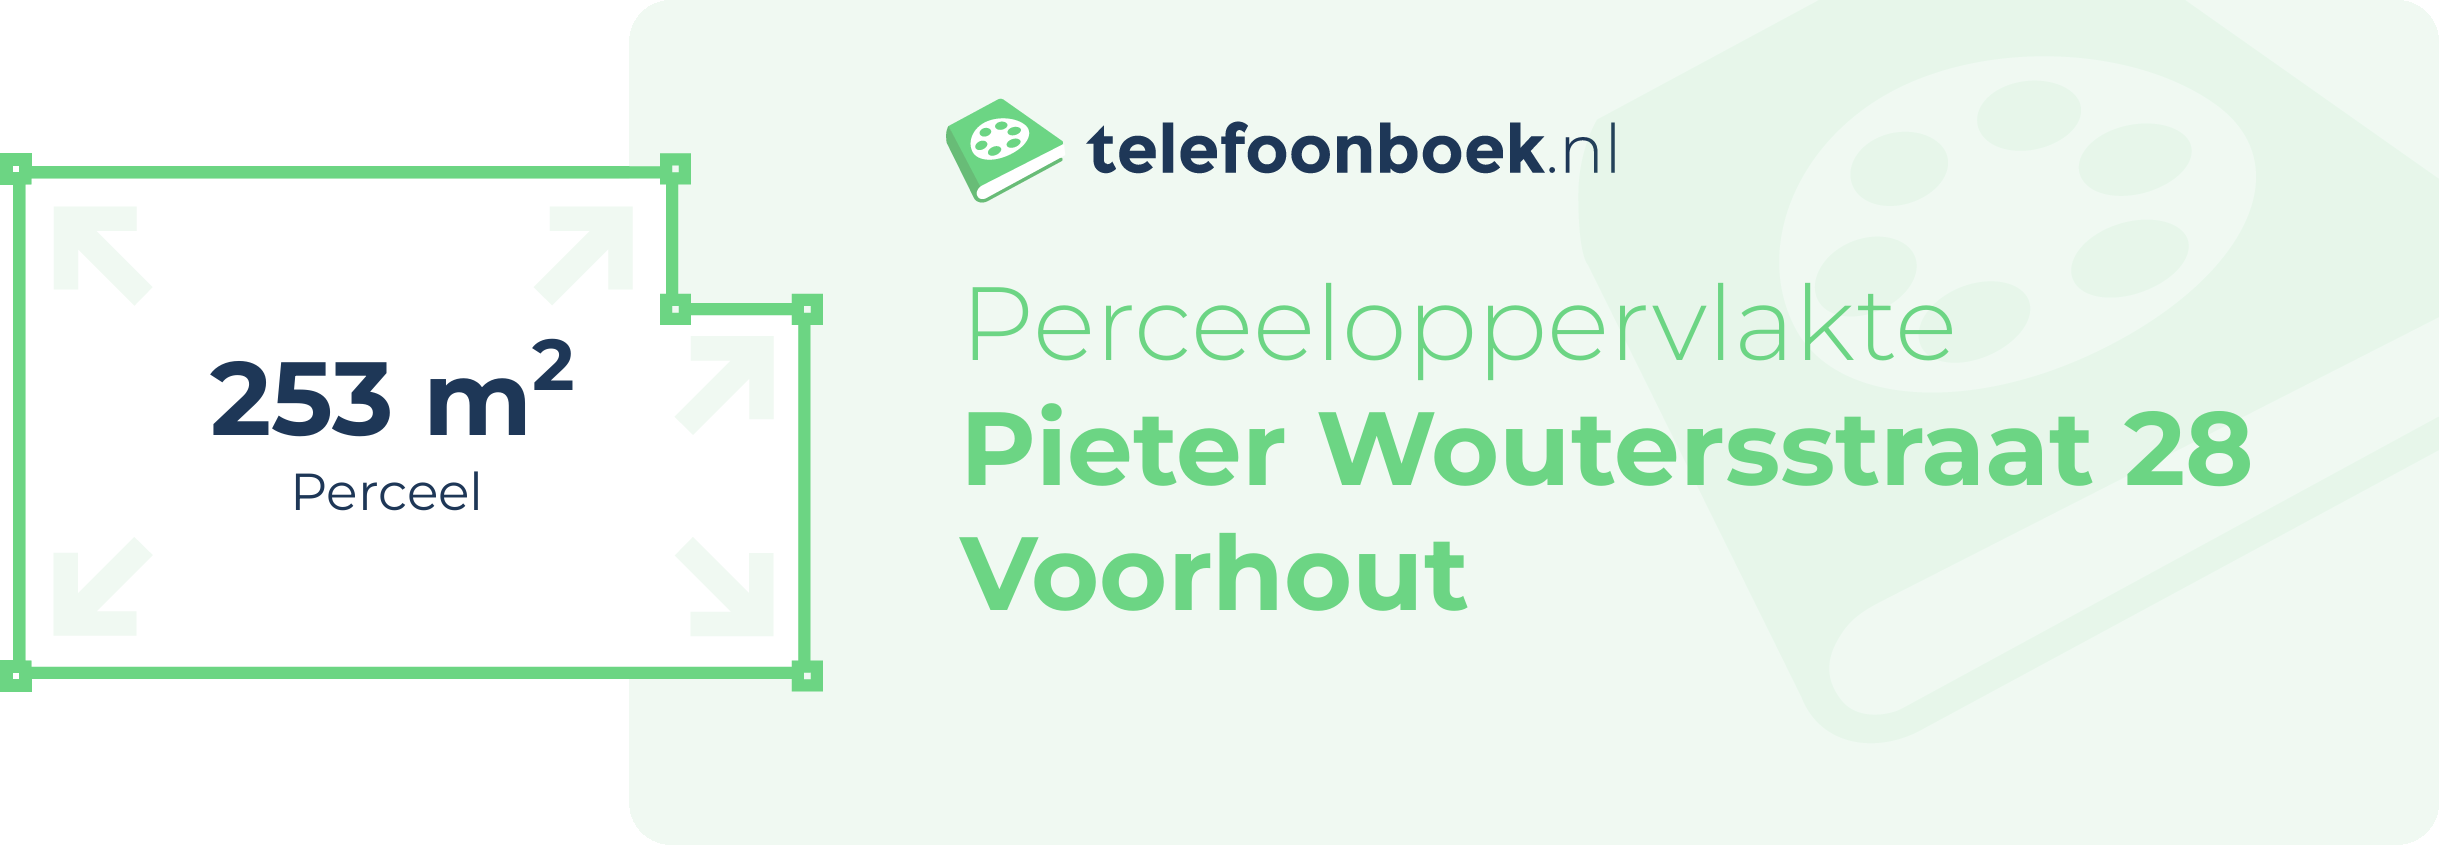 Perceeloppervlakte Pieter Woutersstraat 28 Voorhout